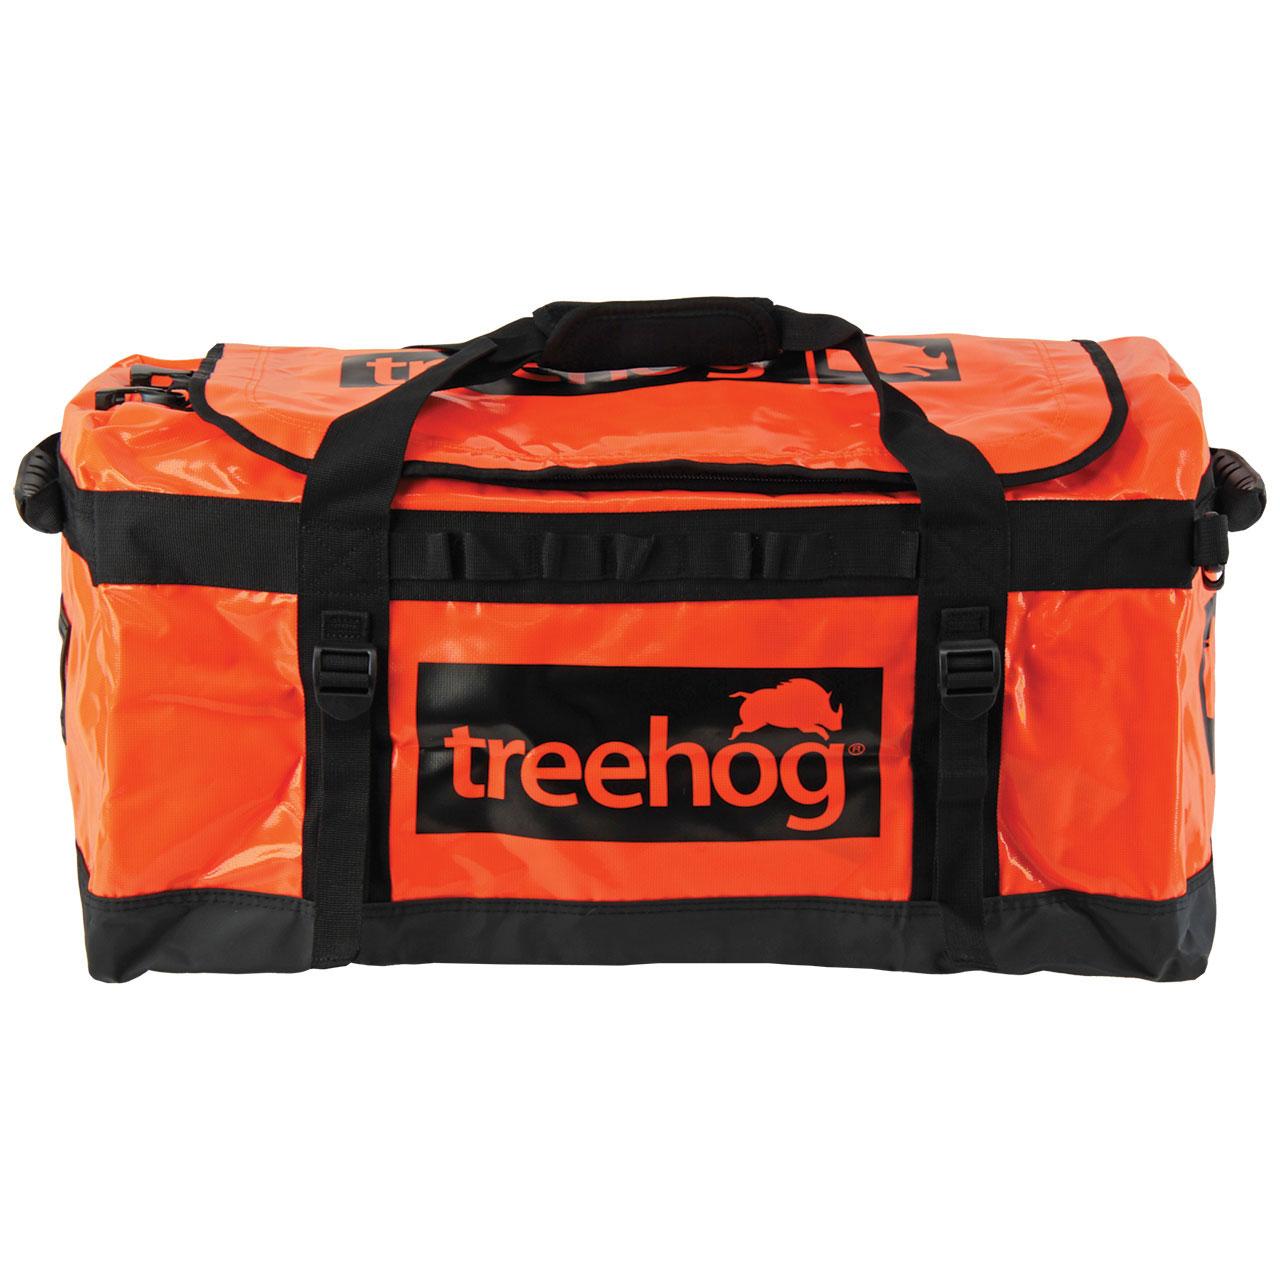 treehog 70l kit bag